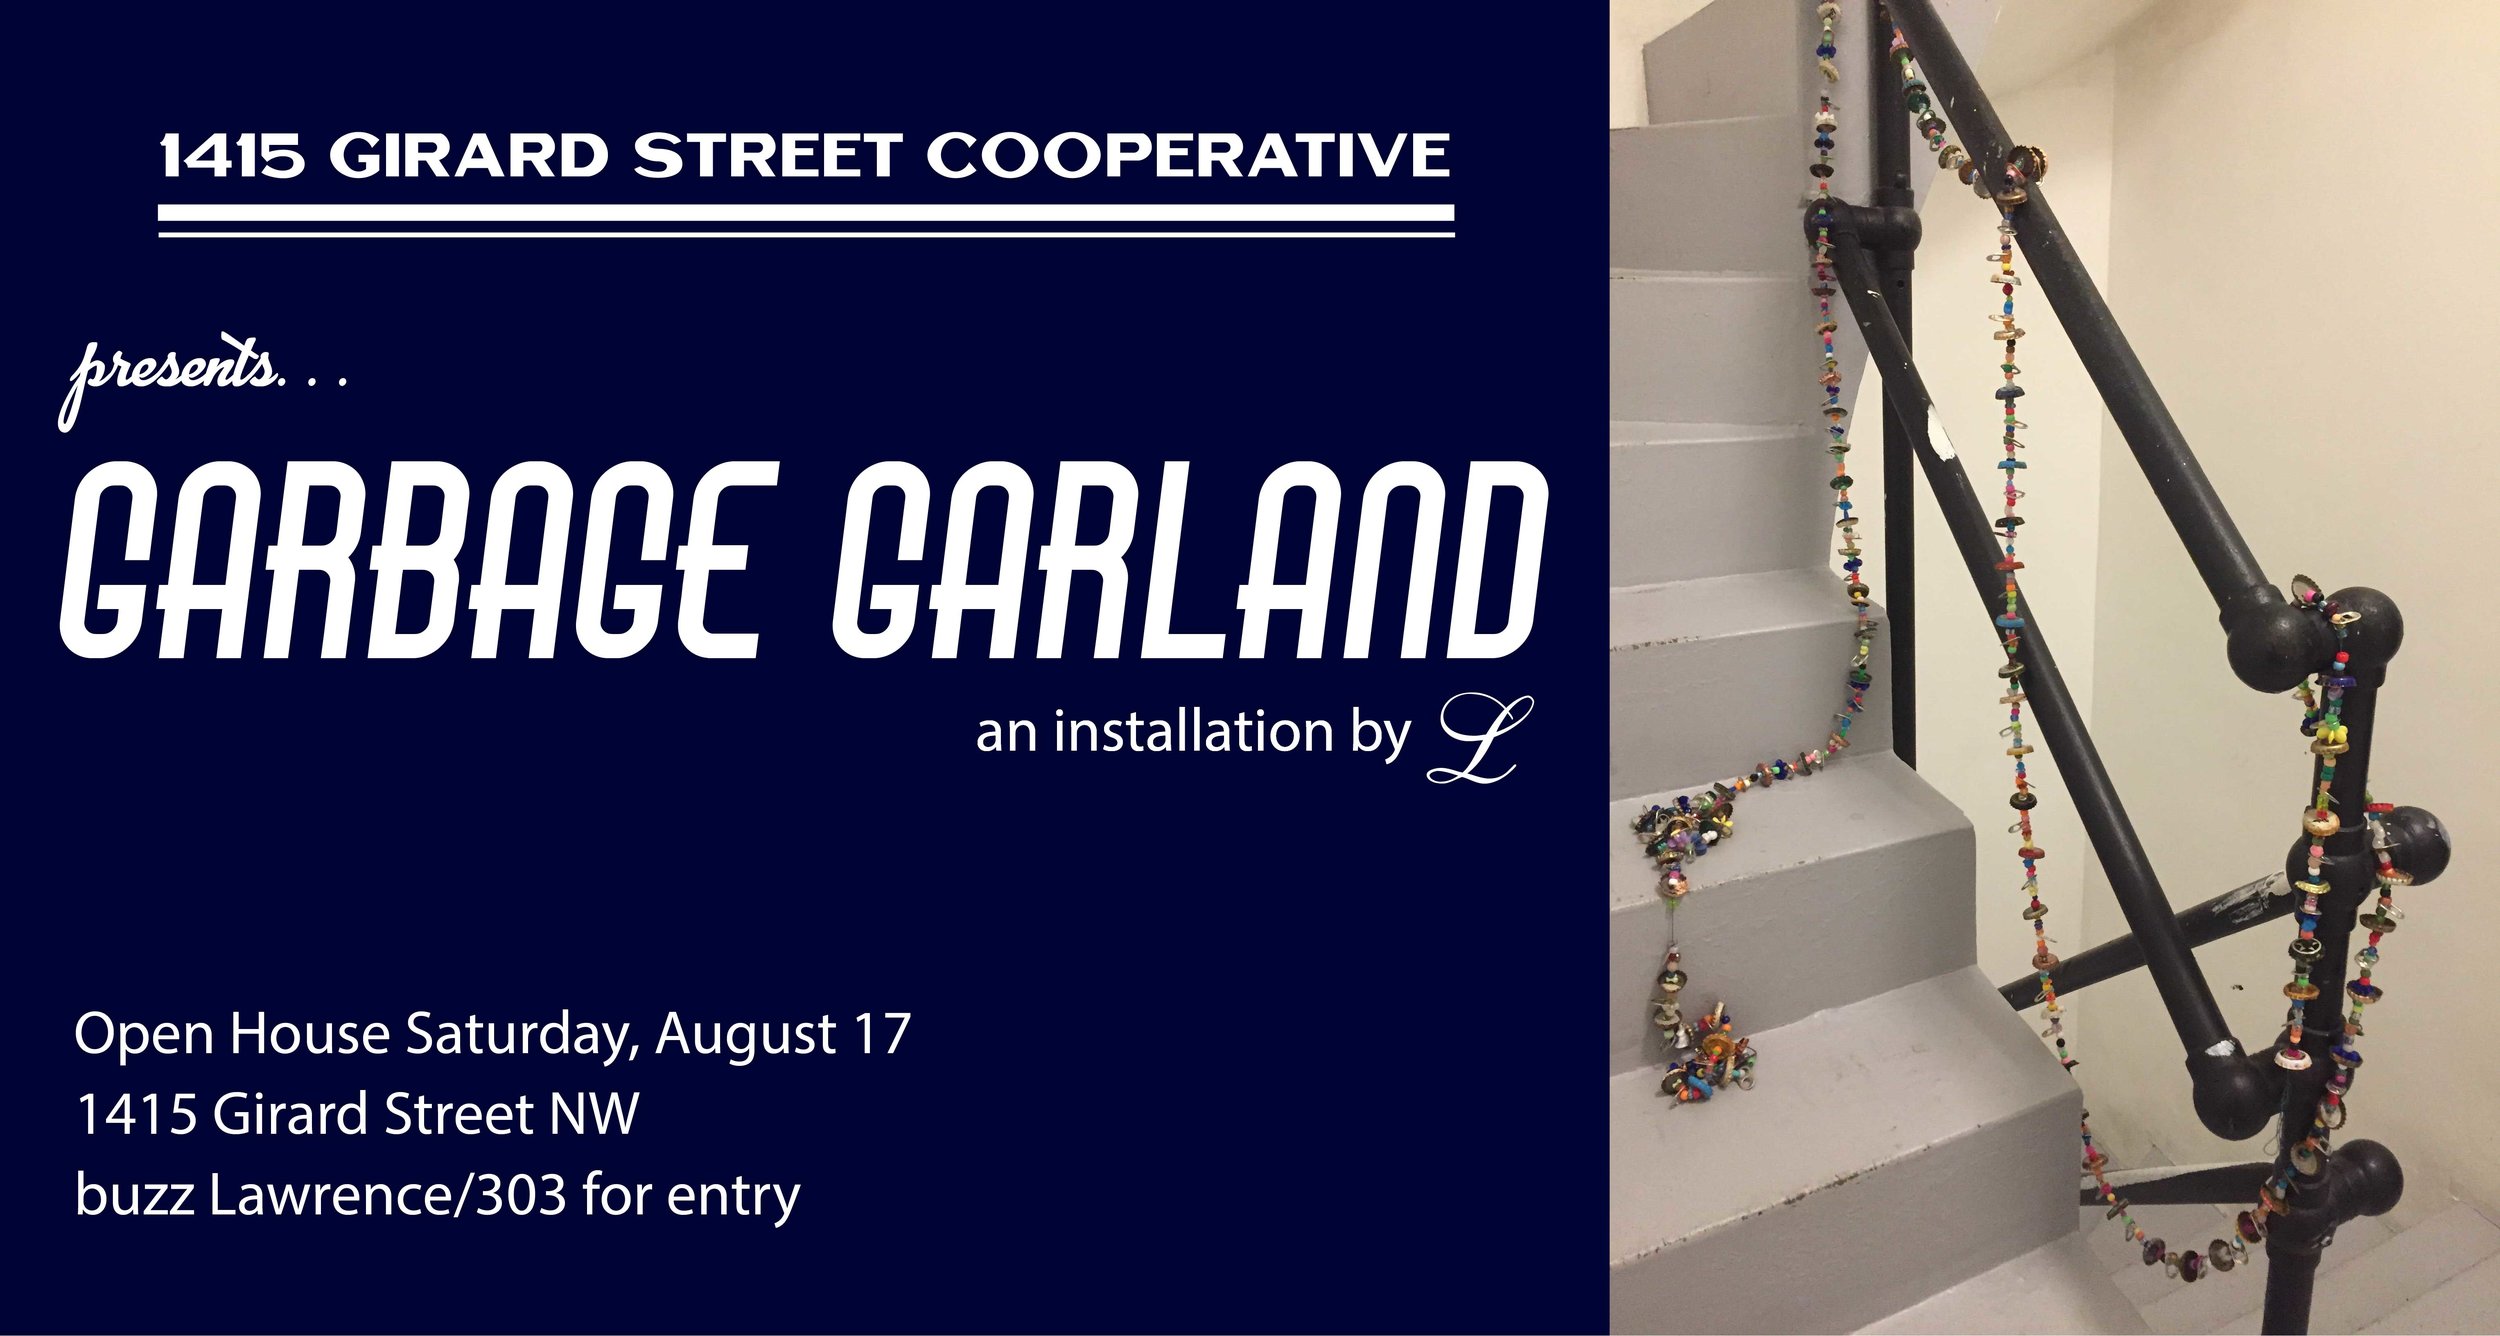 Garbage Garland invite.jpg